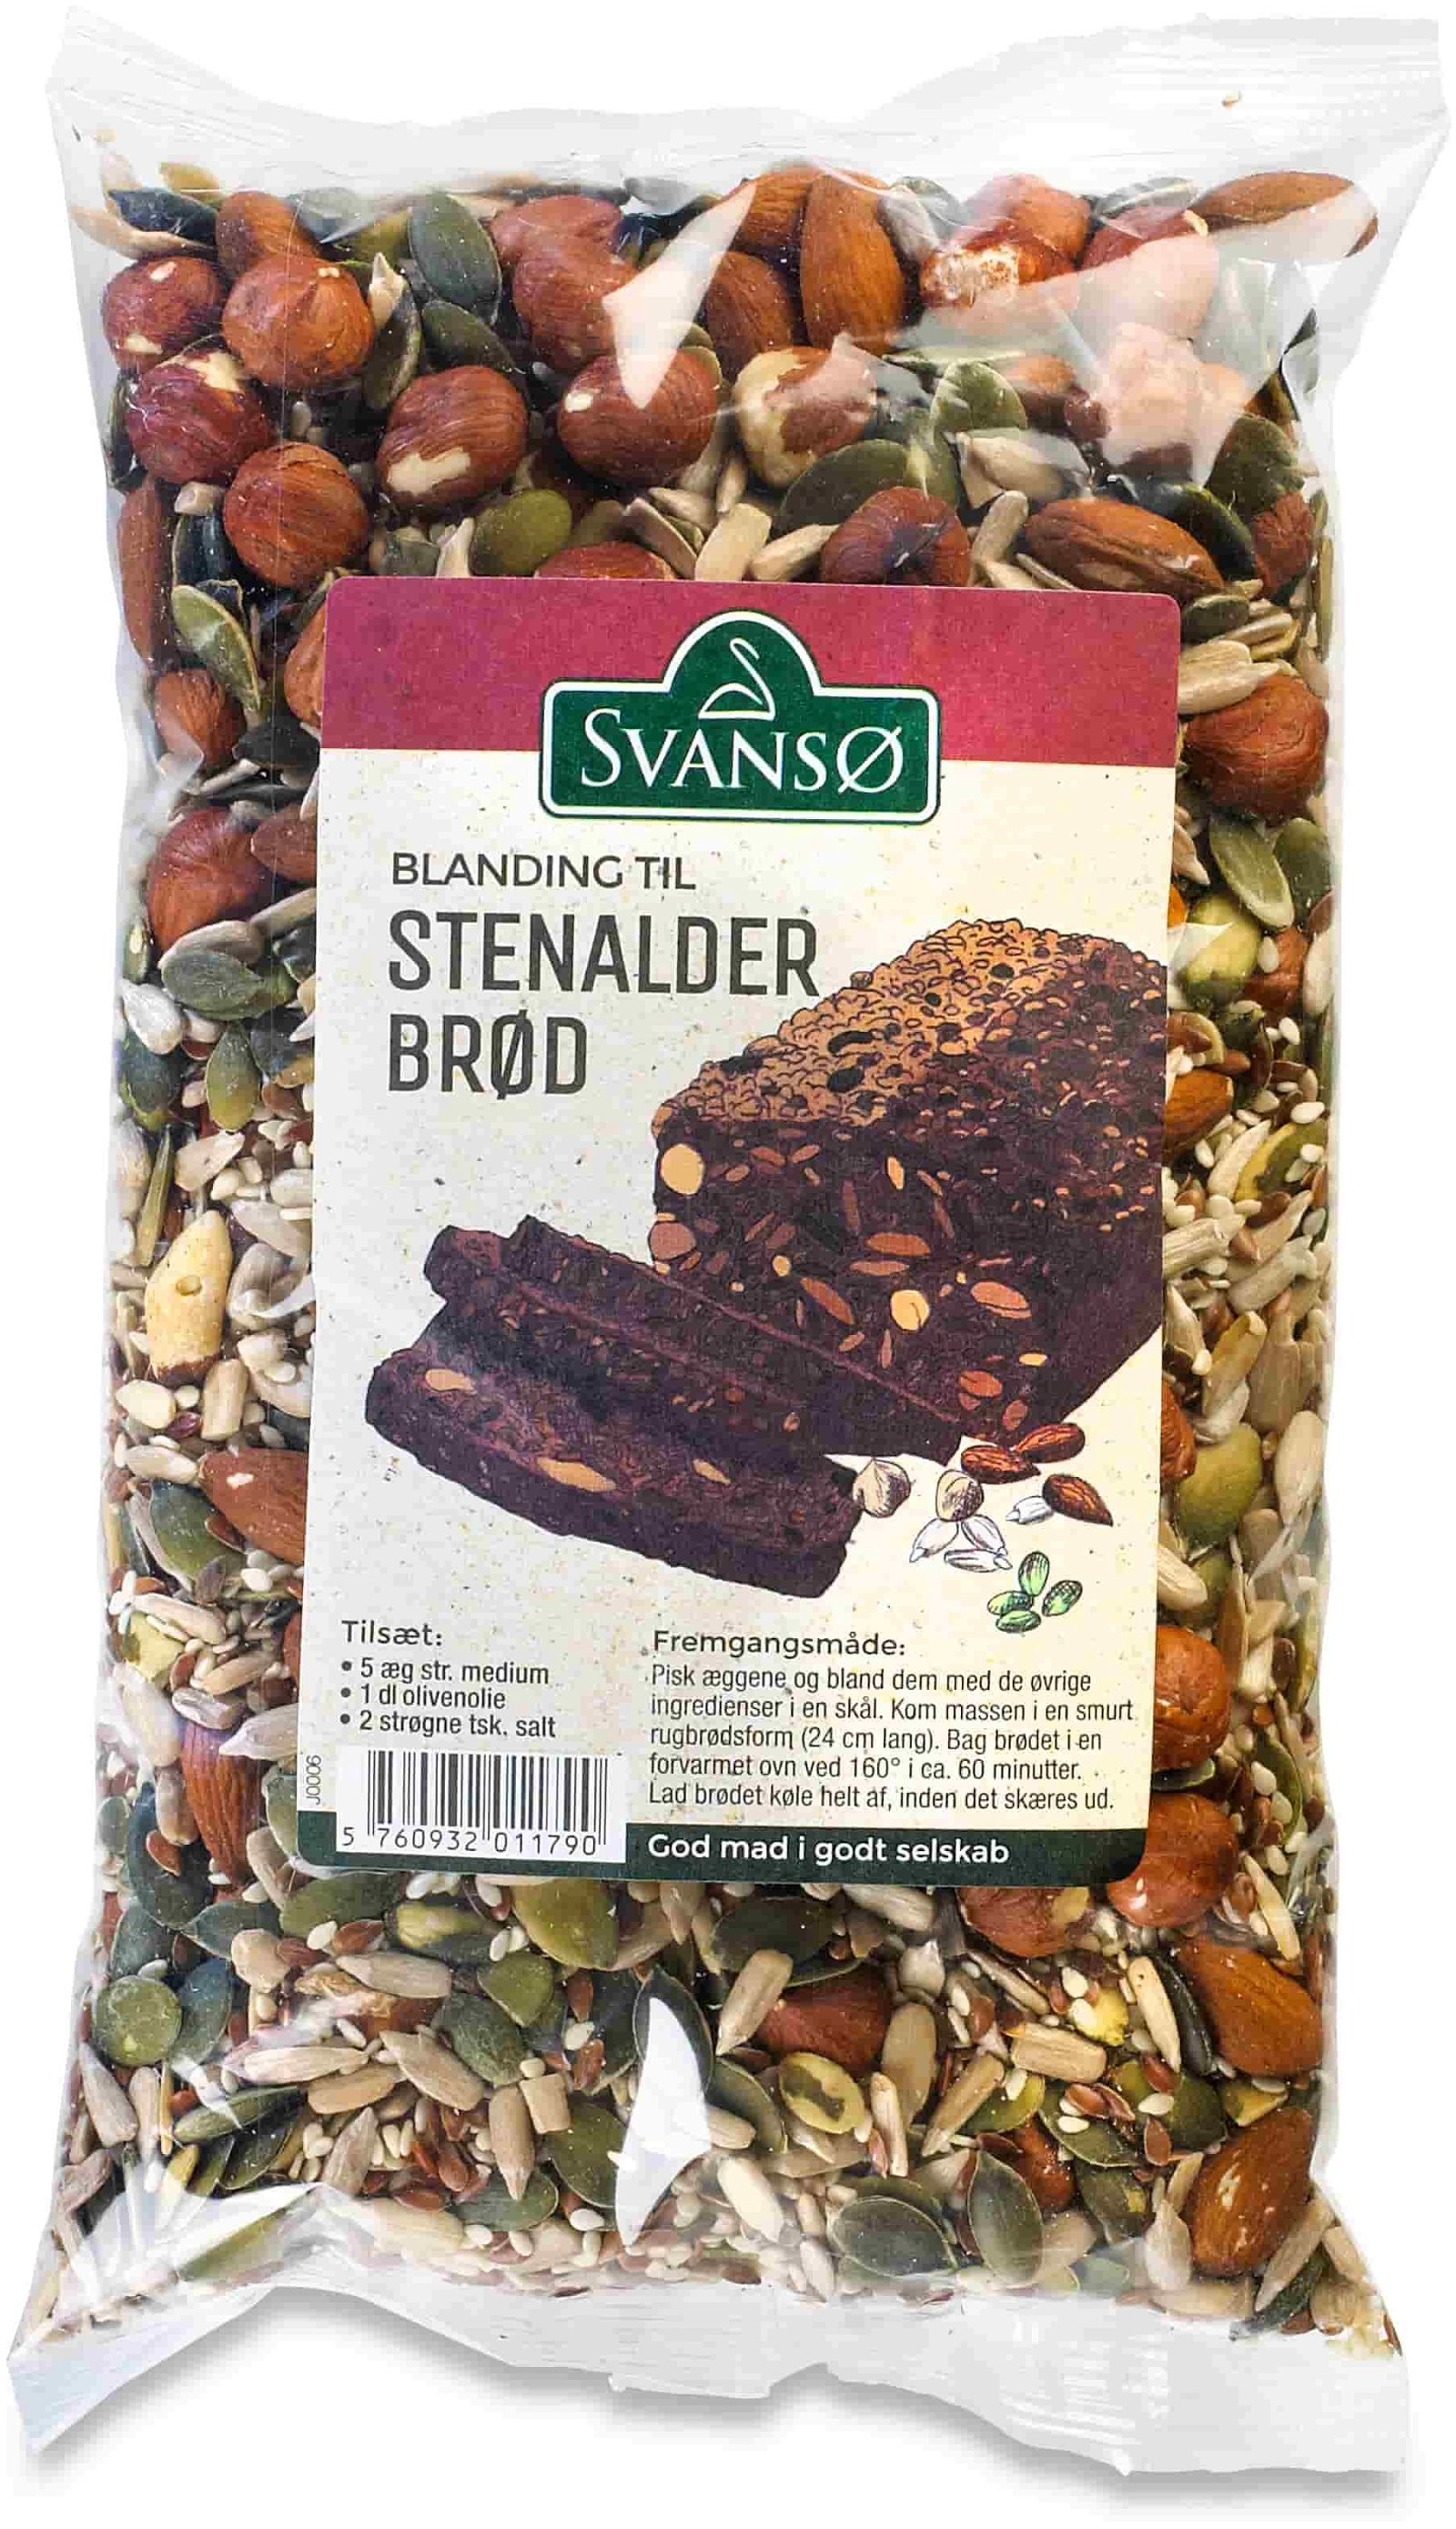 Svansø Stone age bread 500g